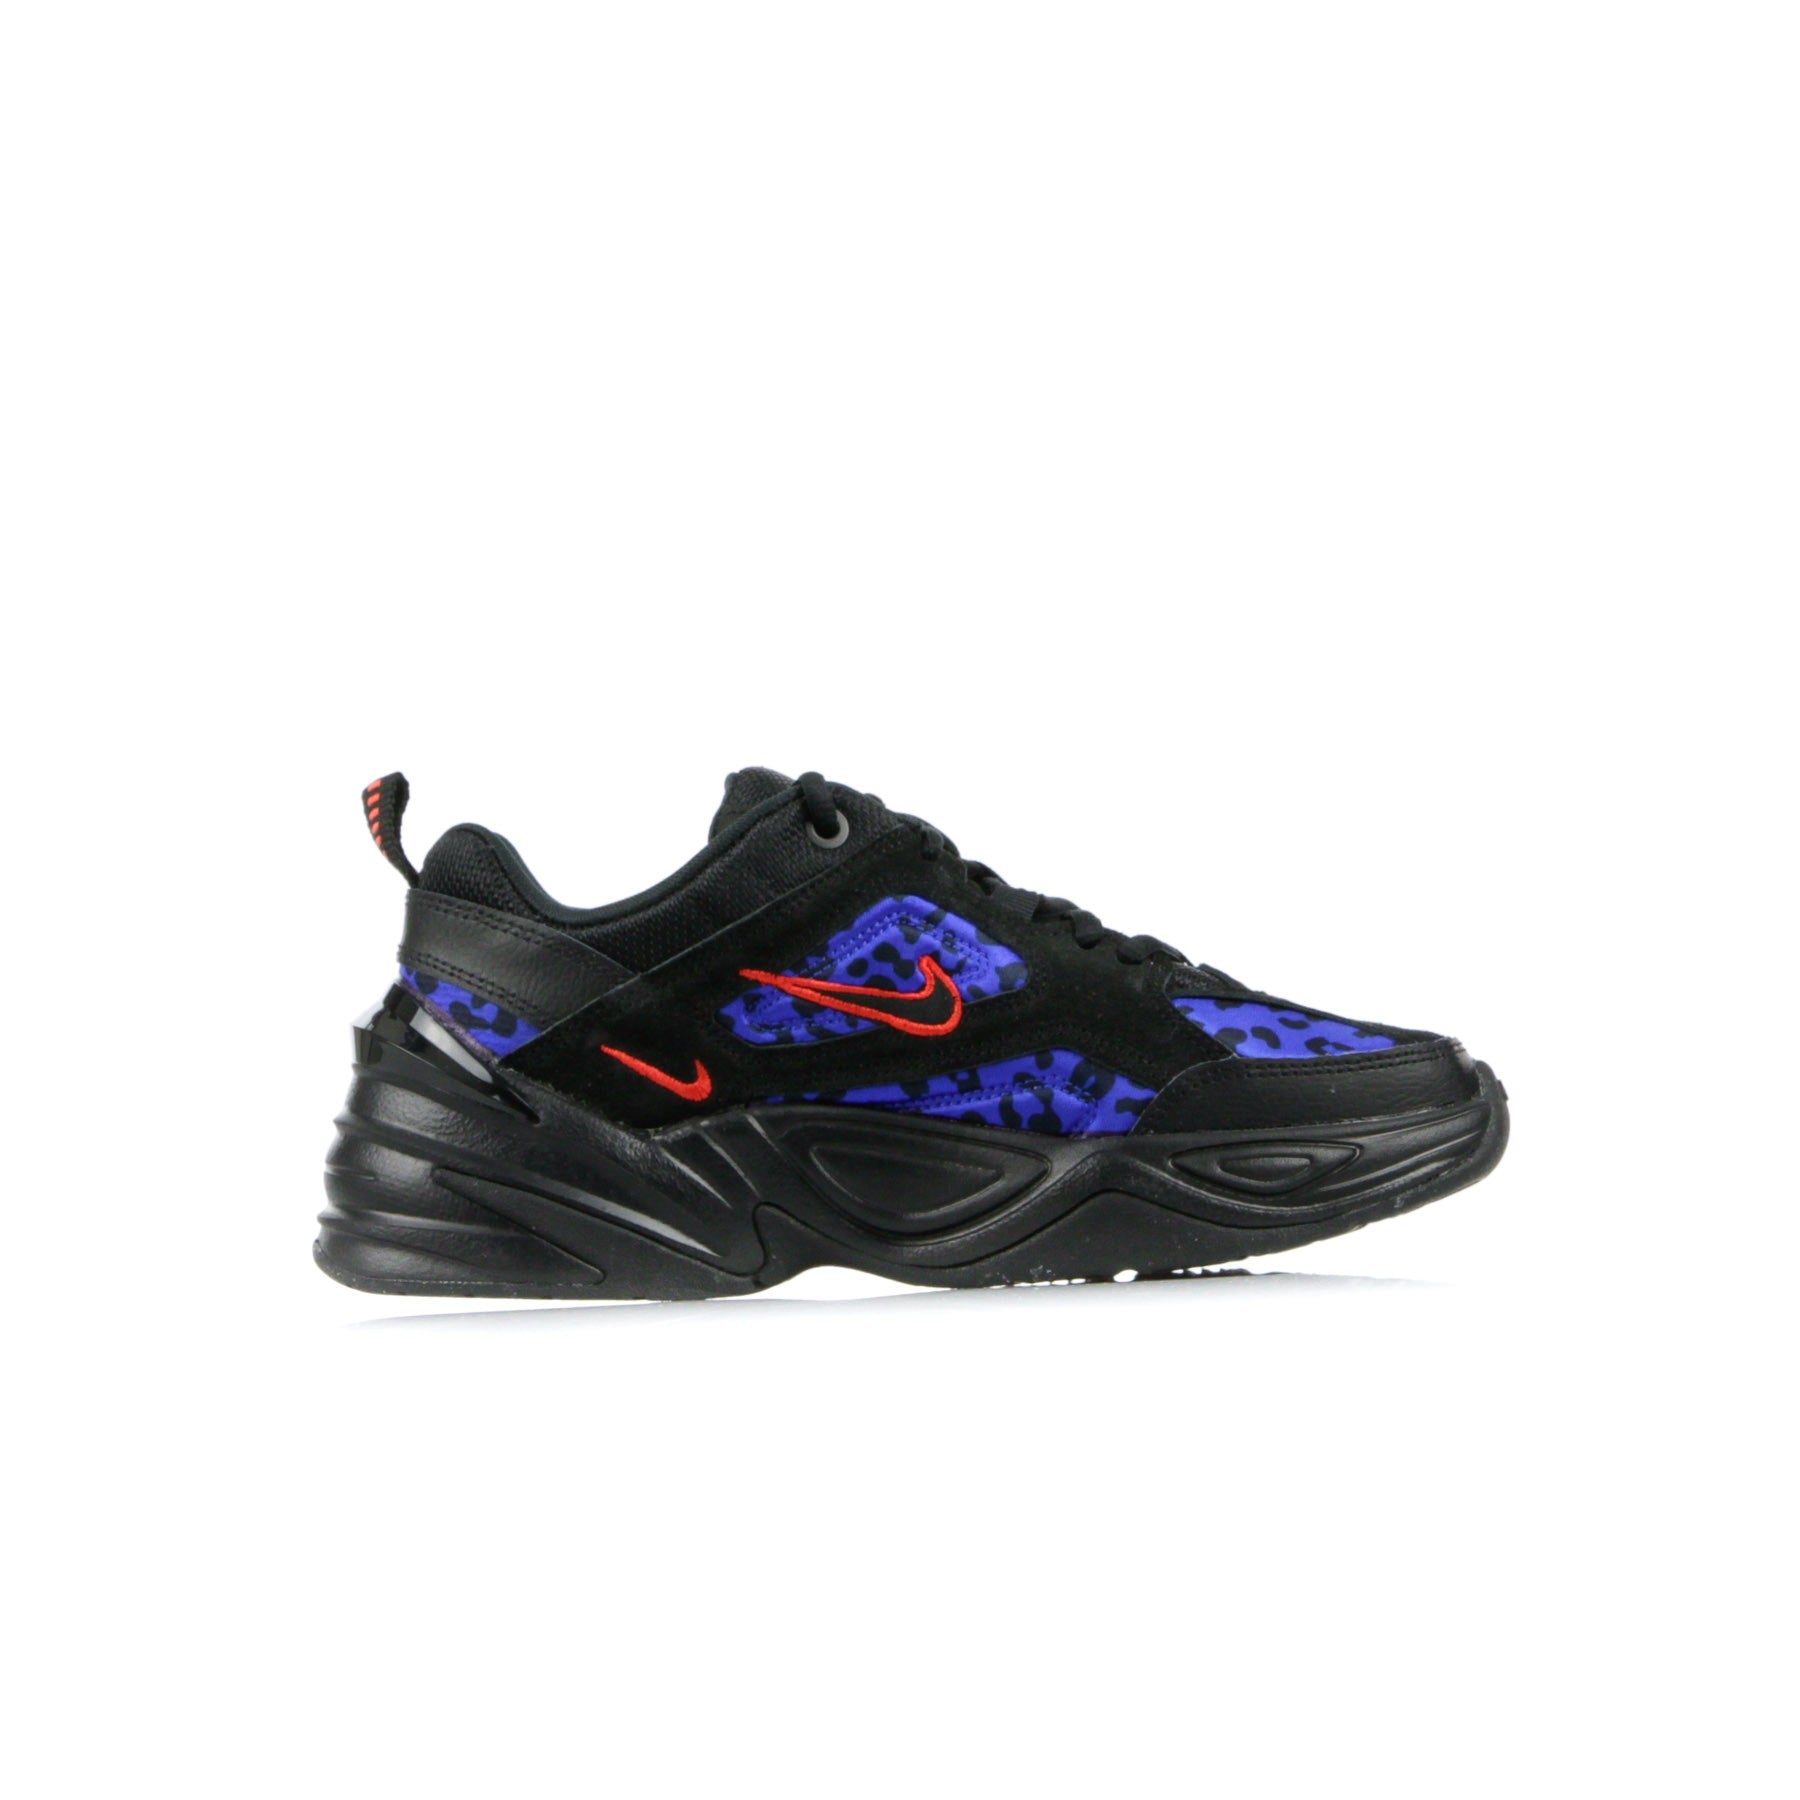 Women's Low Shoe W Nike M2kn Tekno Black/habanero Red/racer Blue